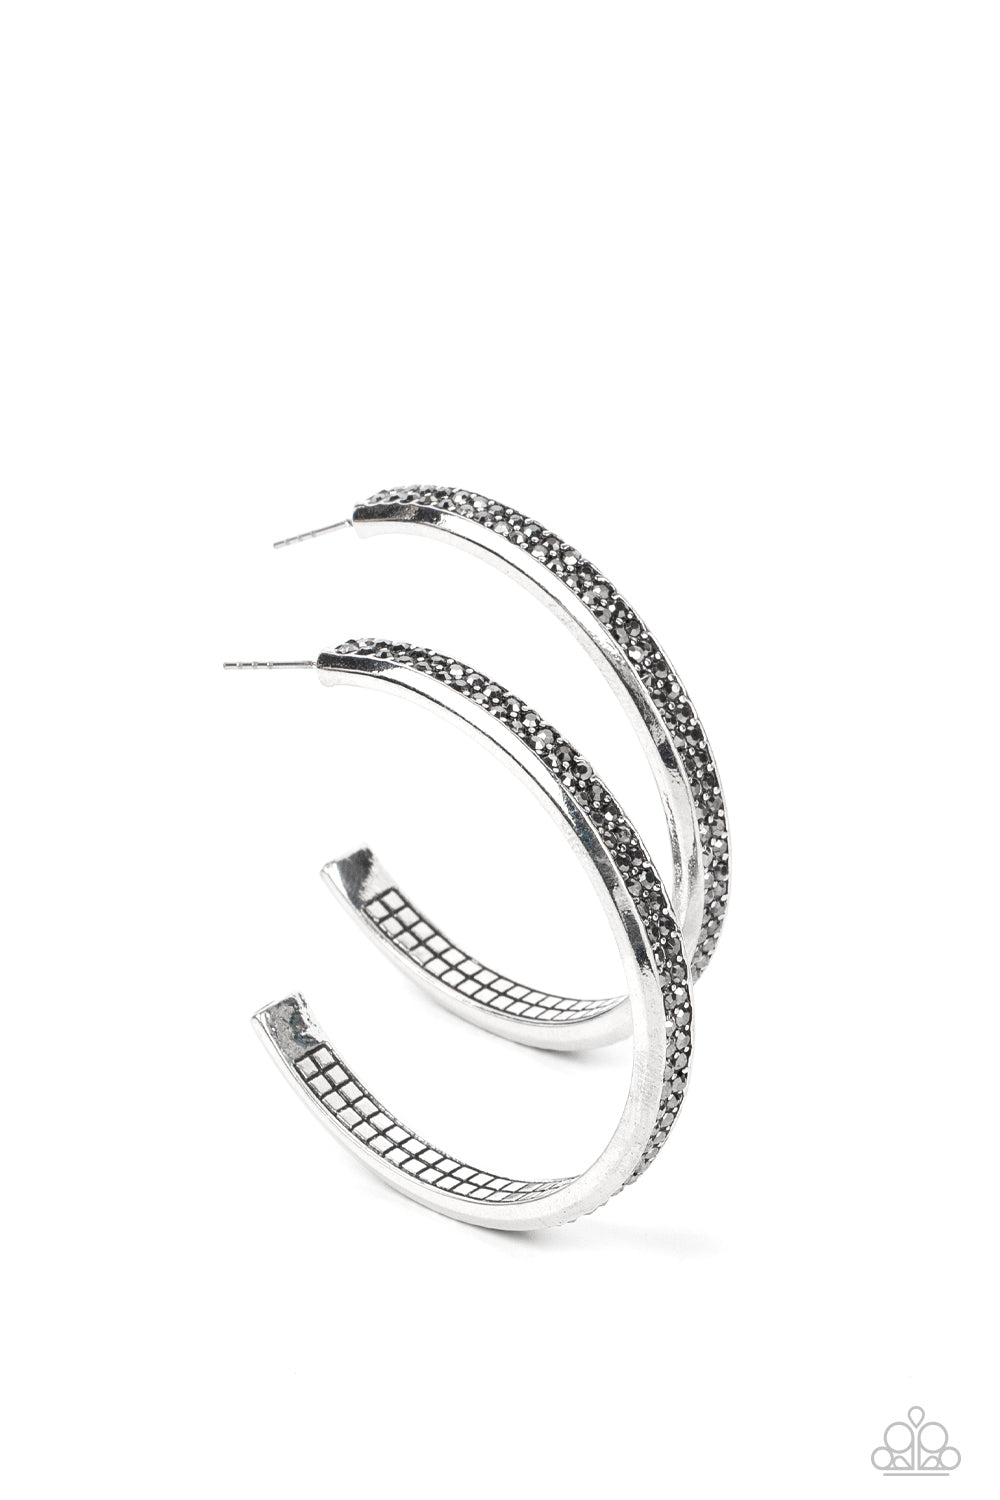 Flash Freeze - Silver Earring - Paparazzi - Dare2bdazzlin N Jewelry